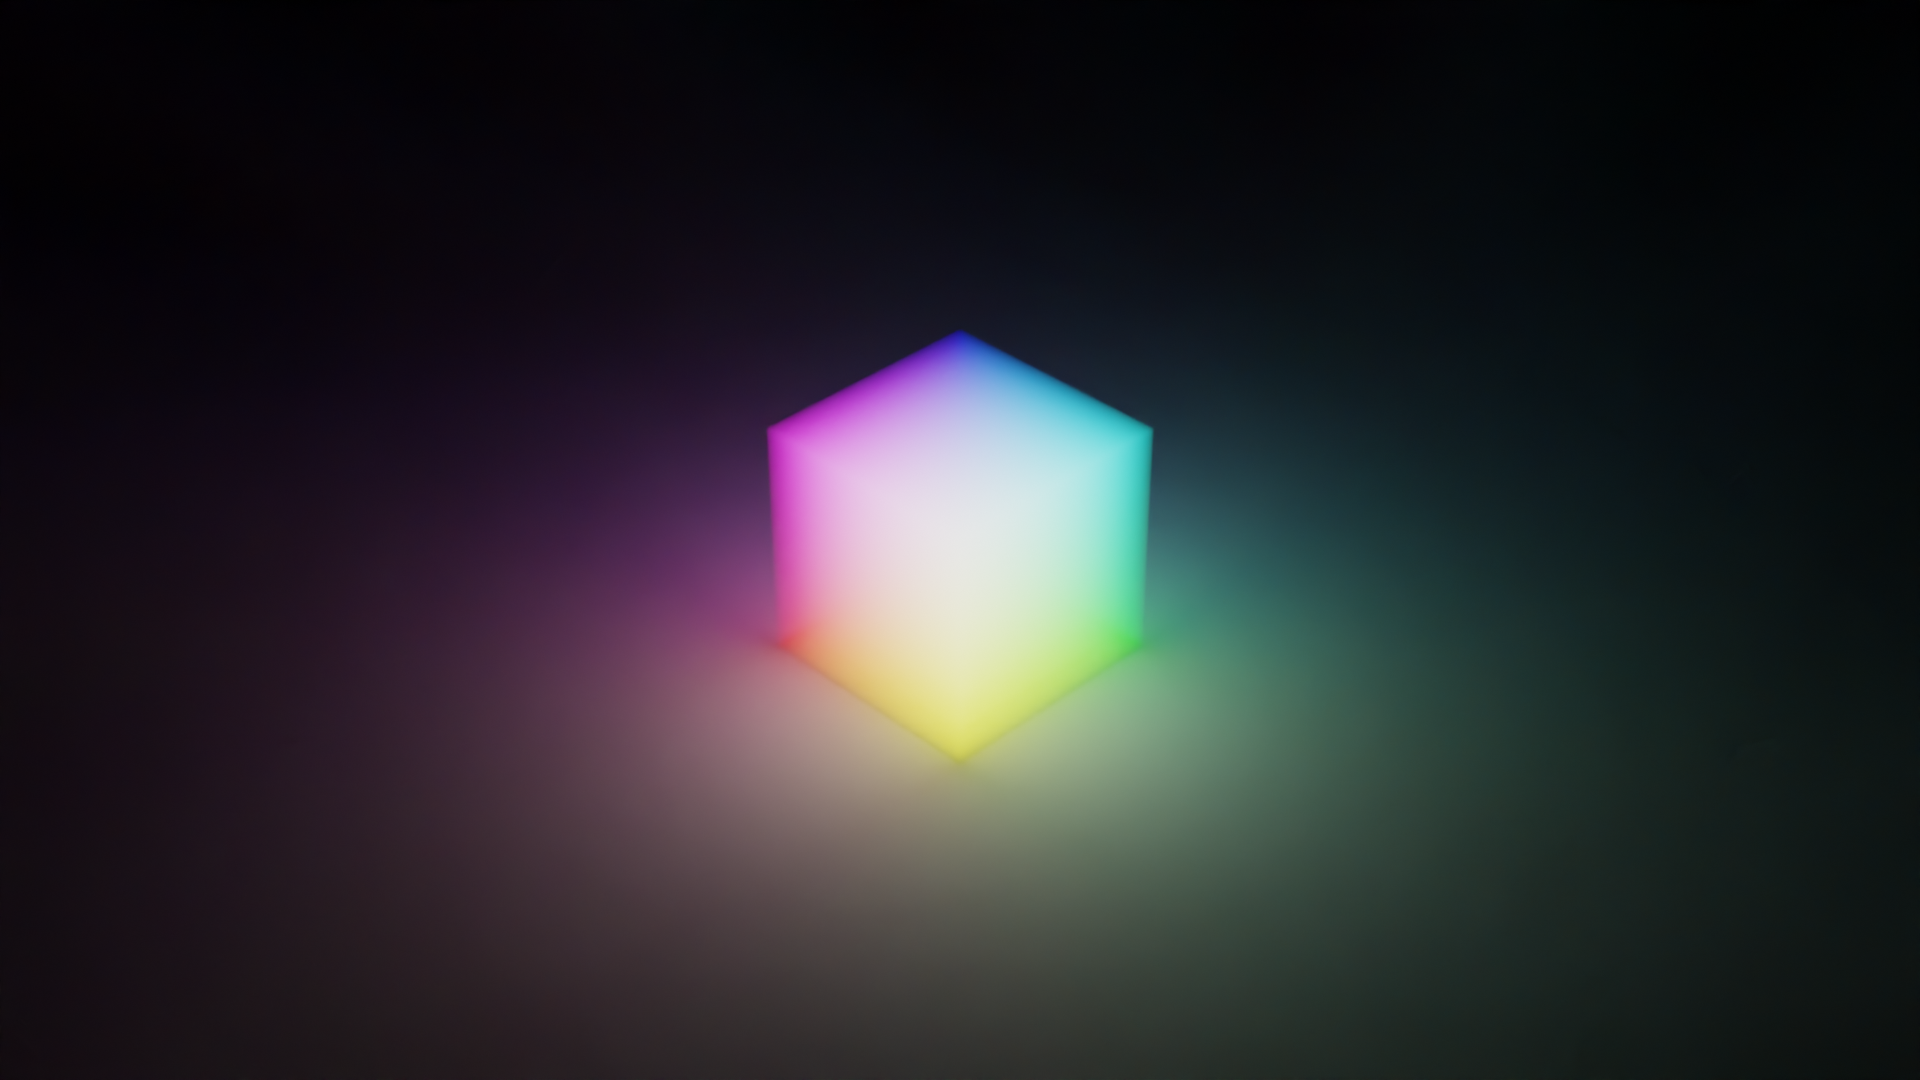 rgb cube